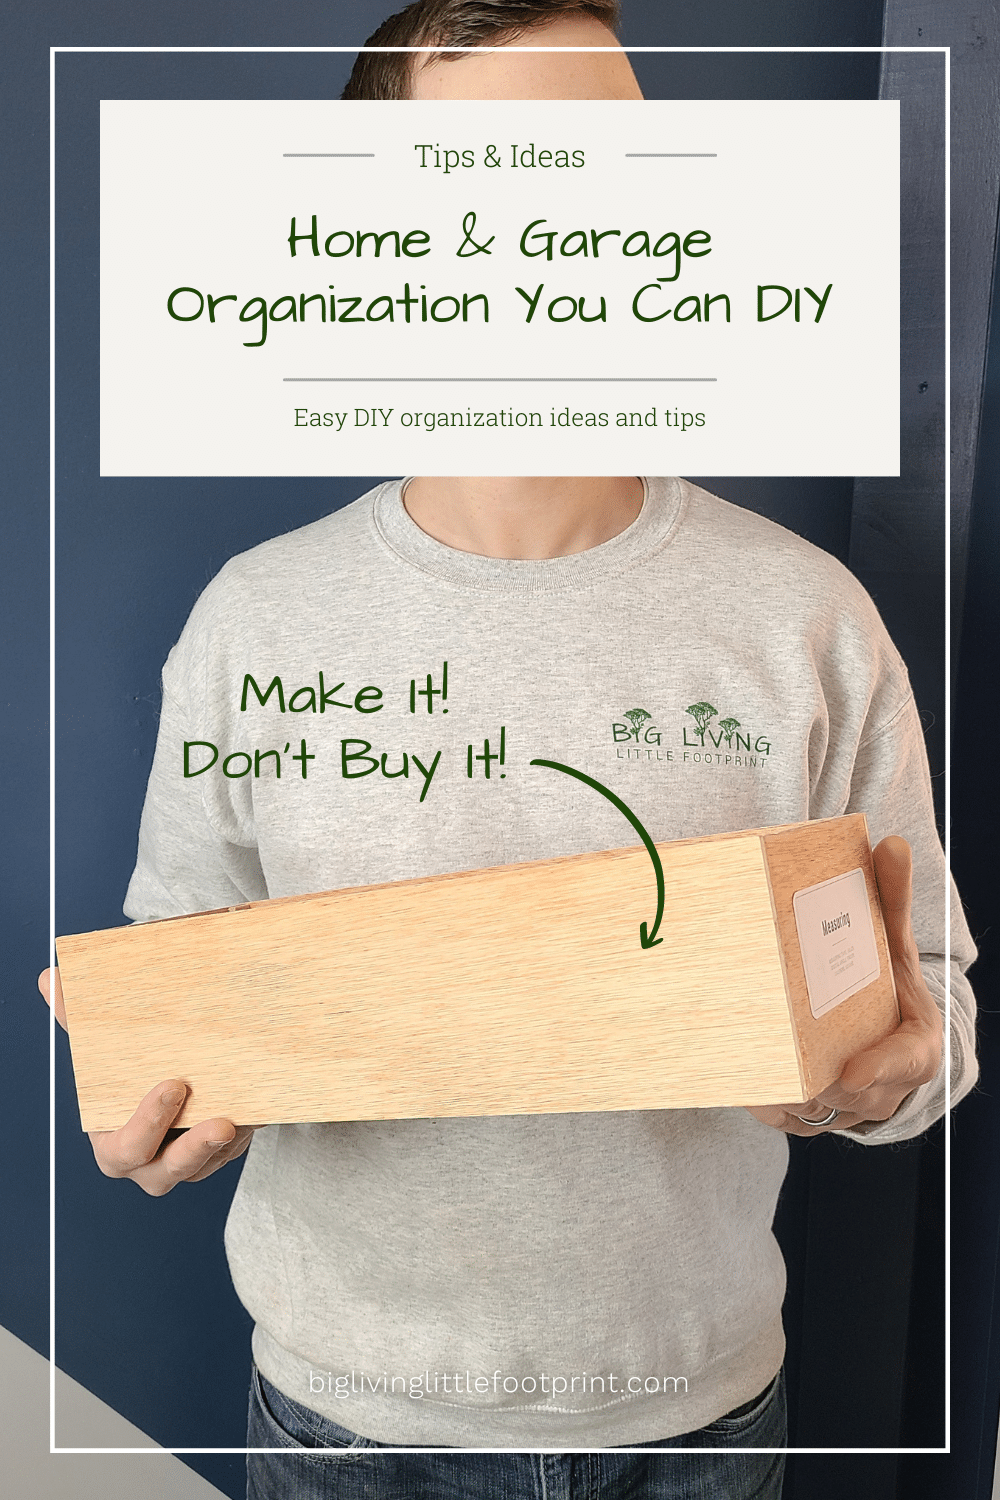 Home & Garage Organization You Can DIY